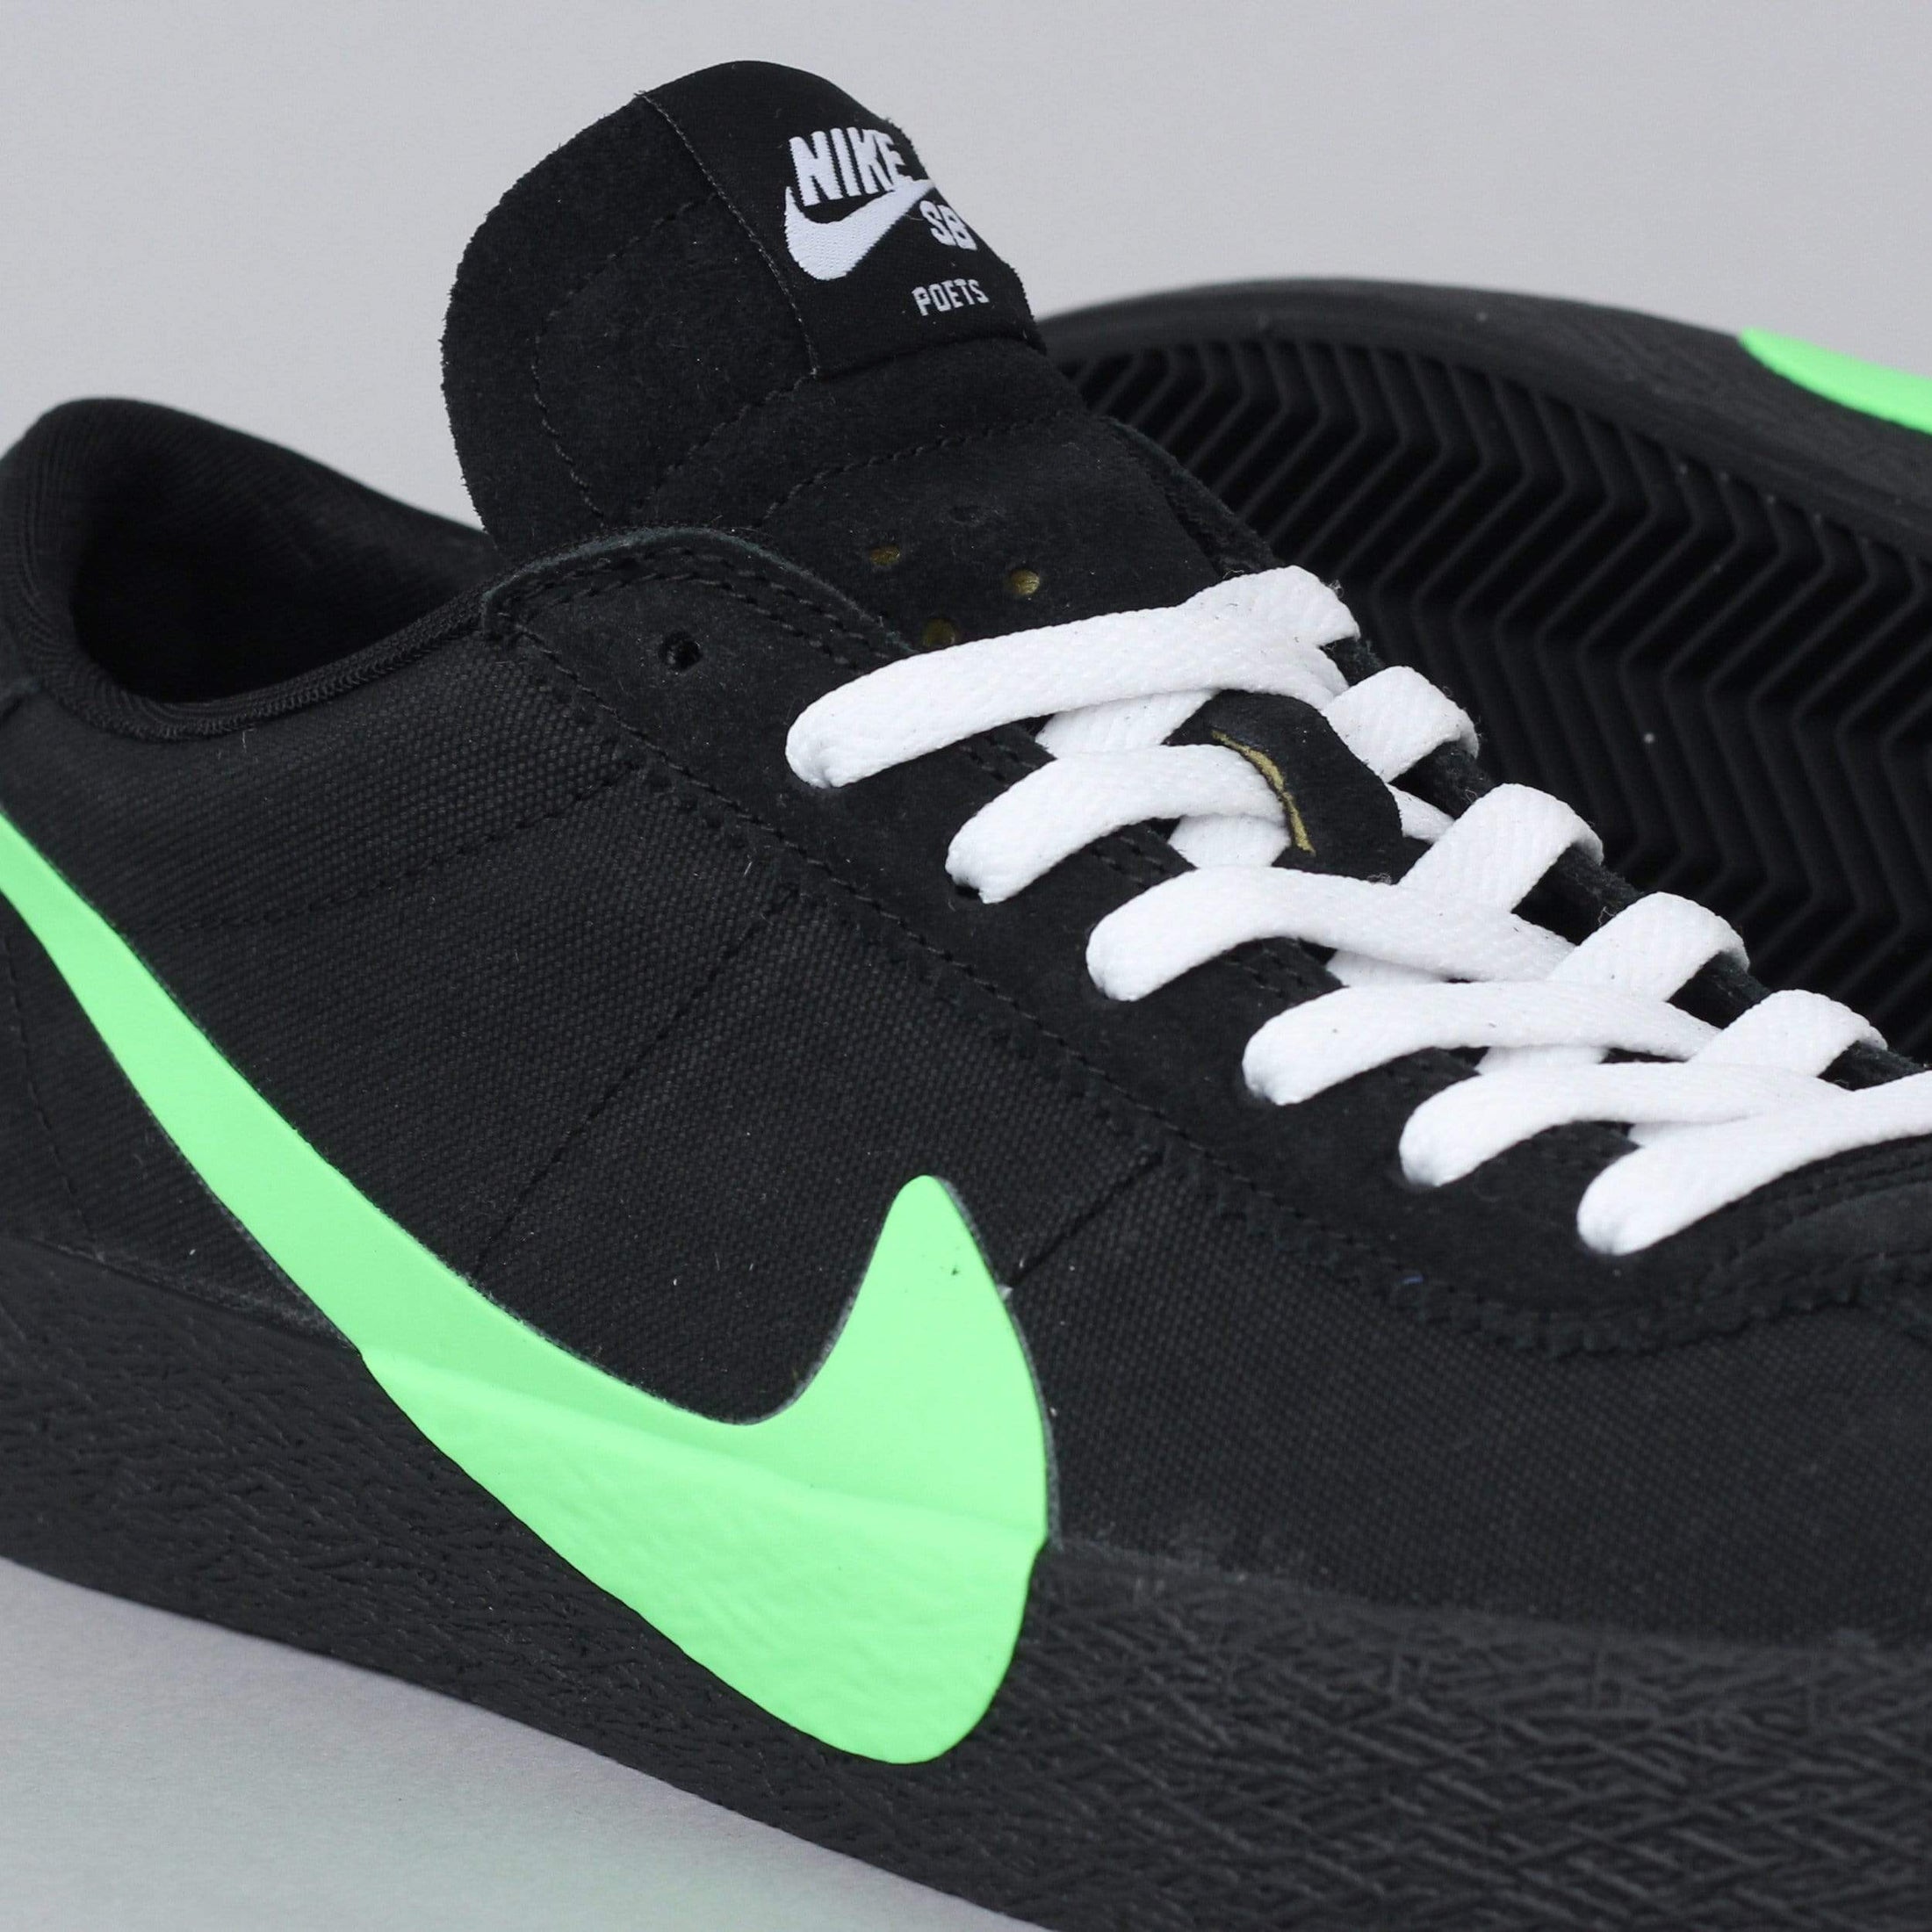 Nike SB X Poets Bruin QS Shoes Black / Voltage Green - White